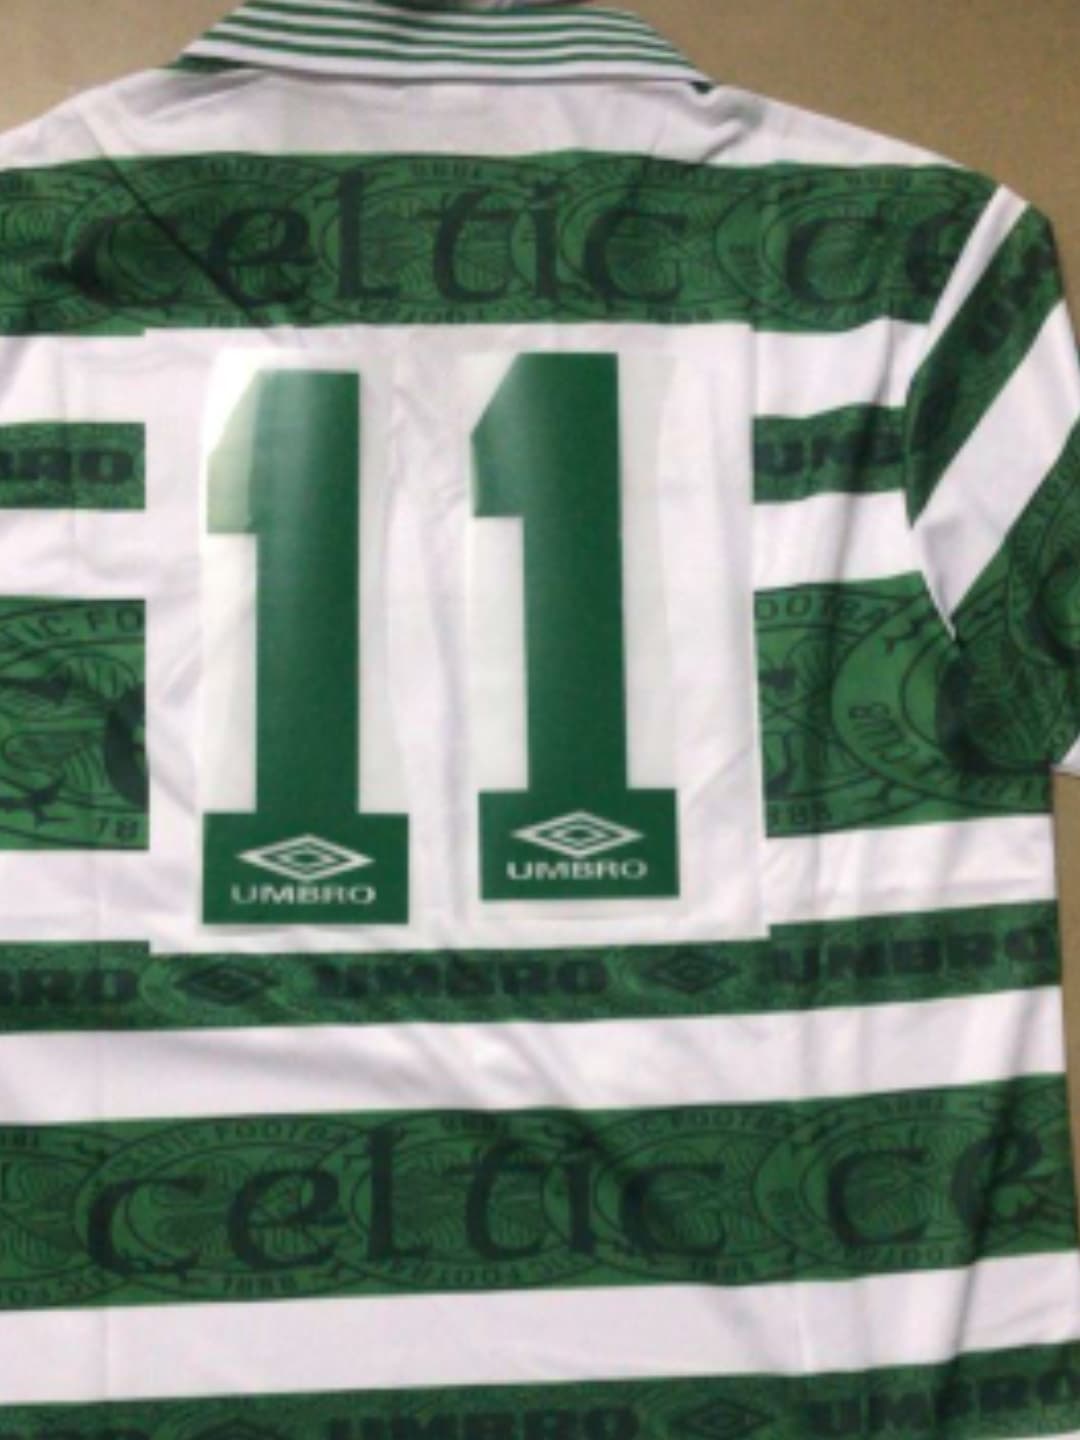 Celtic Home football shirt 1993 - 1995. Sponsored by CR Smith